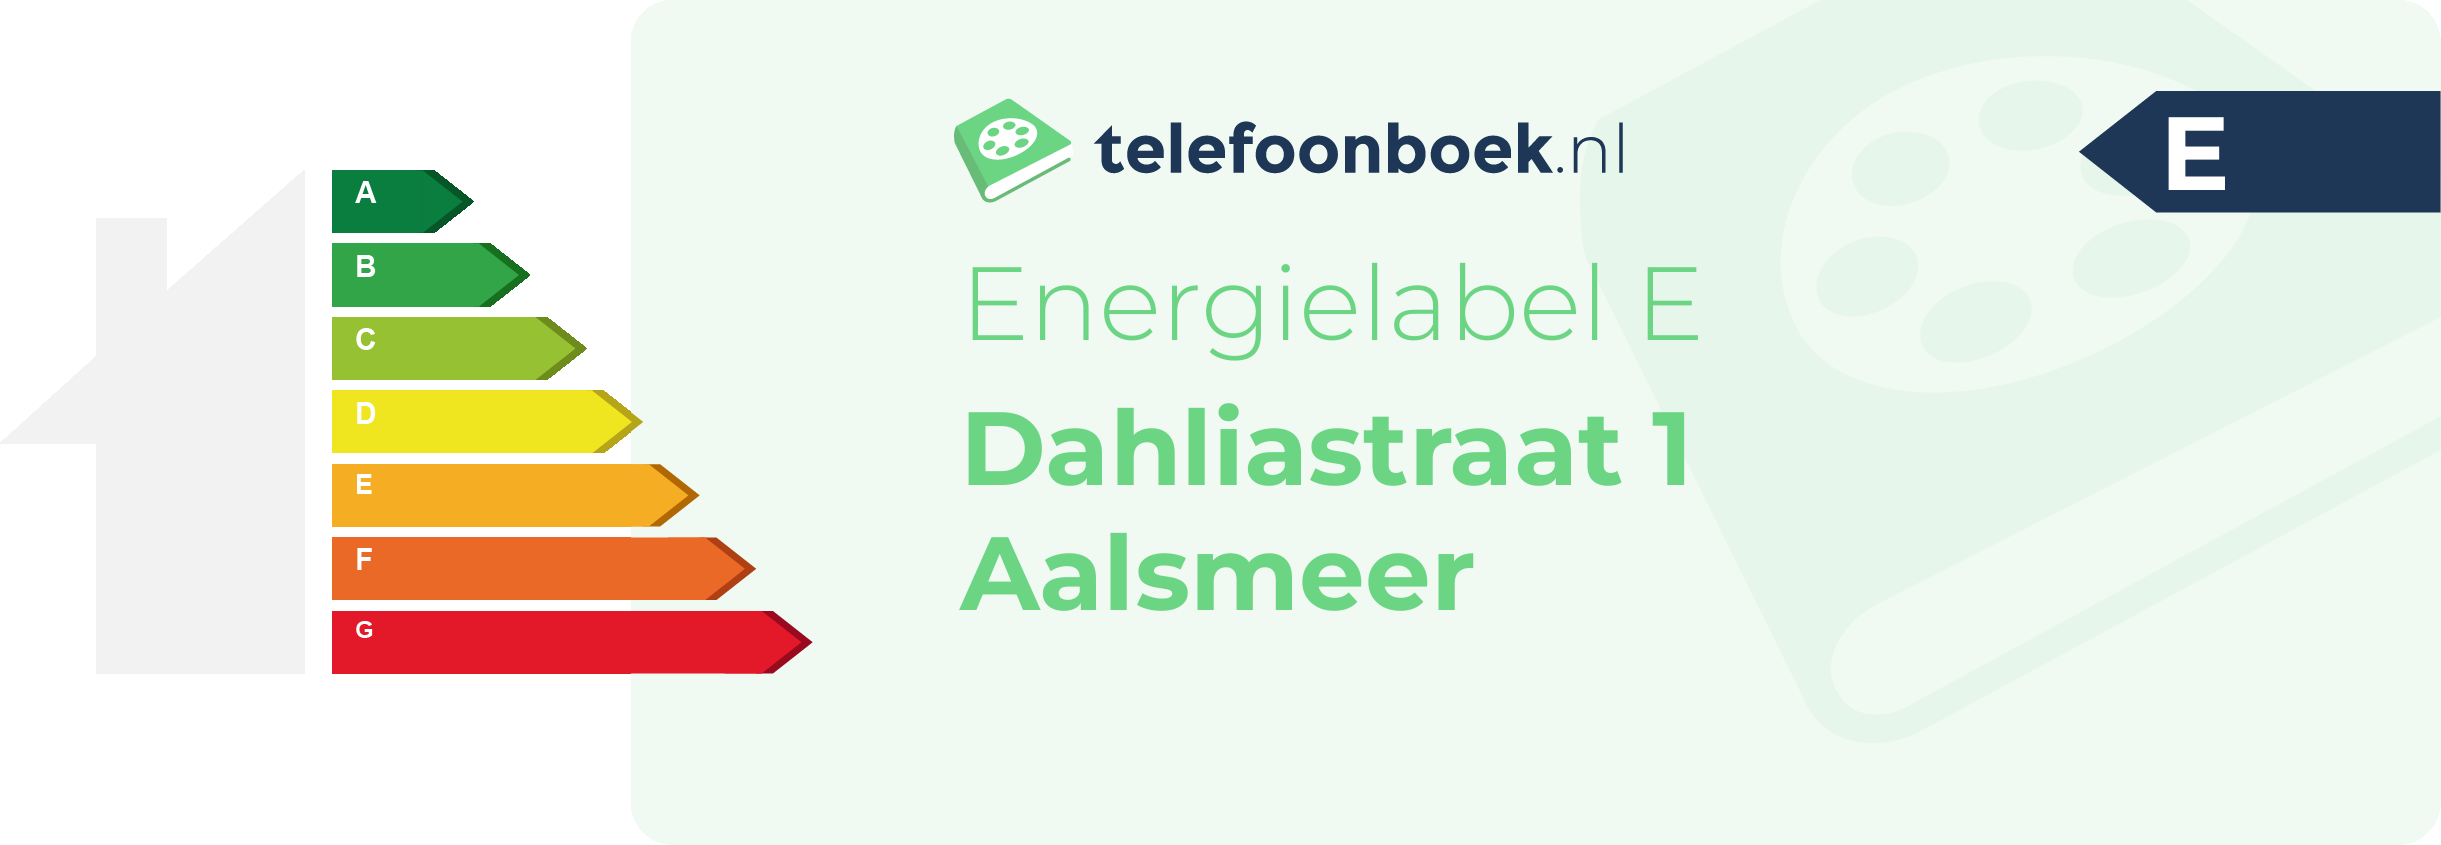 Energielabel Dahliastraat 1 Aalsmeer